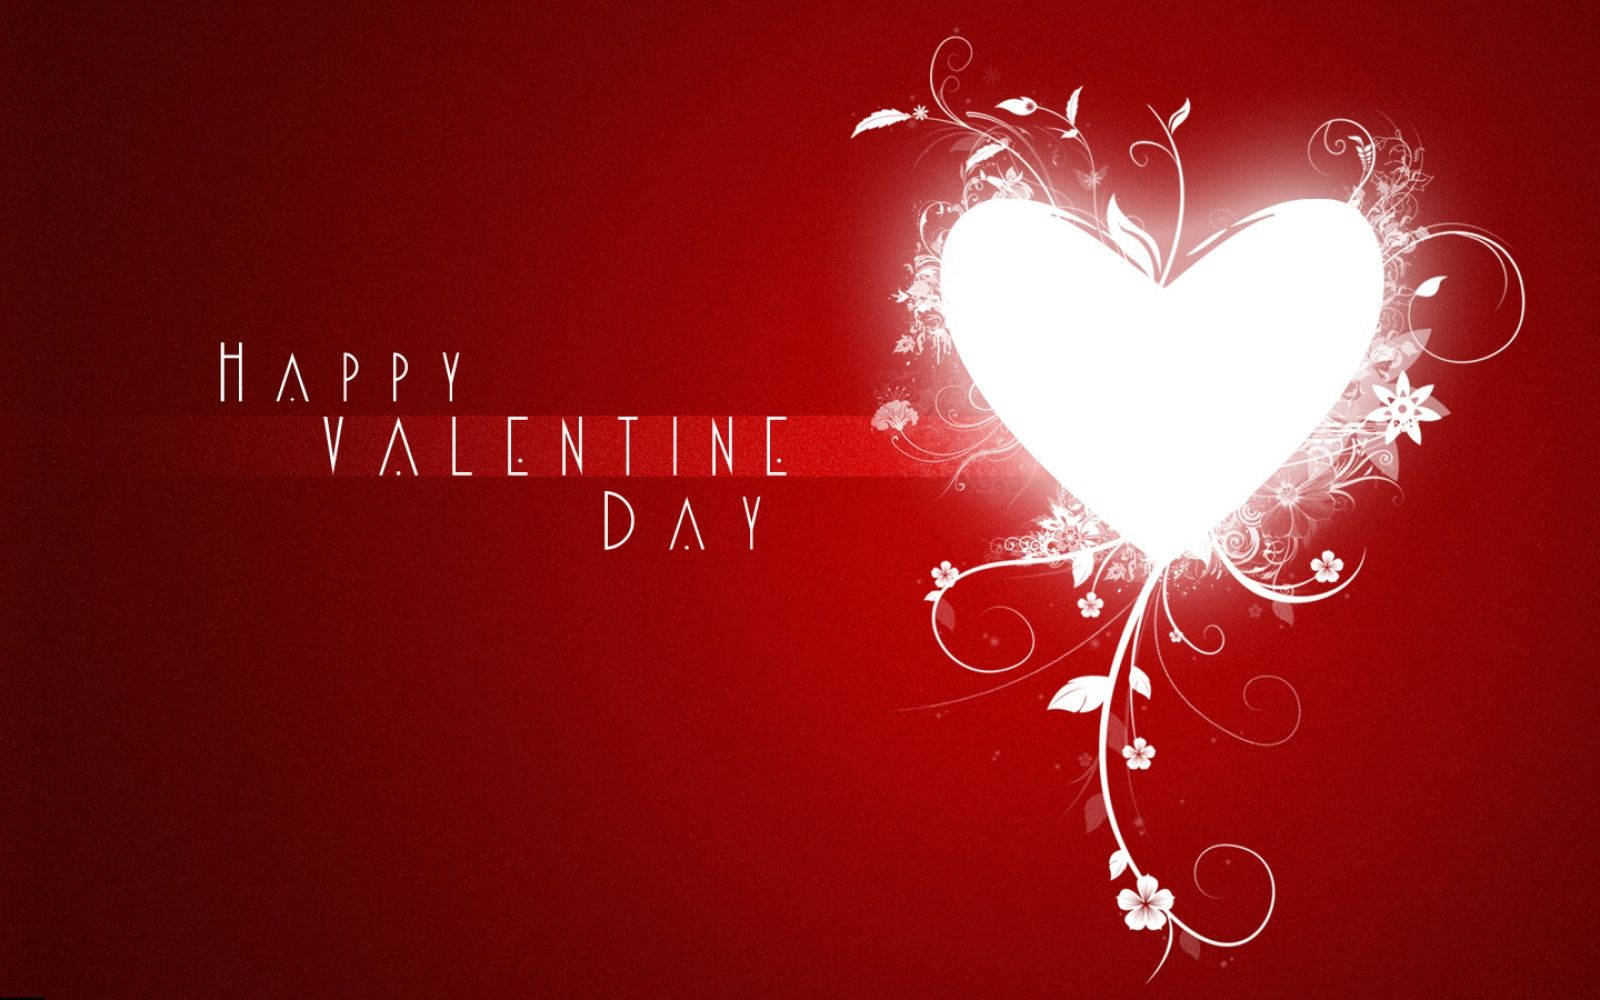 Illuminated Heart With Valentine's Greeting Desktop Wallpaper